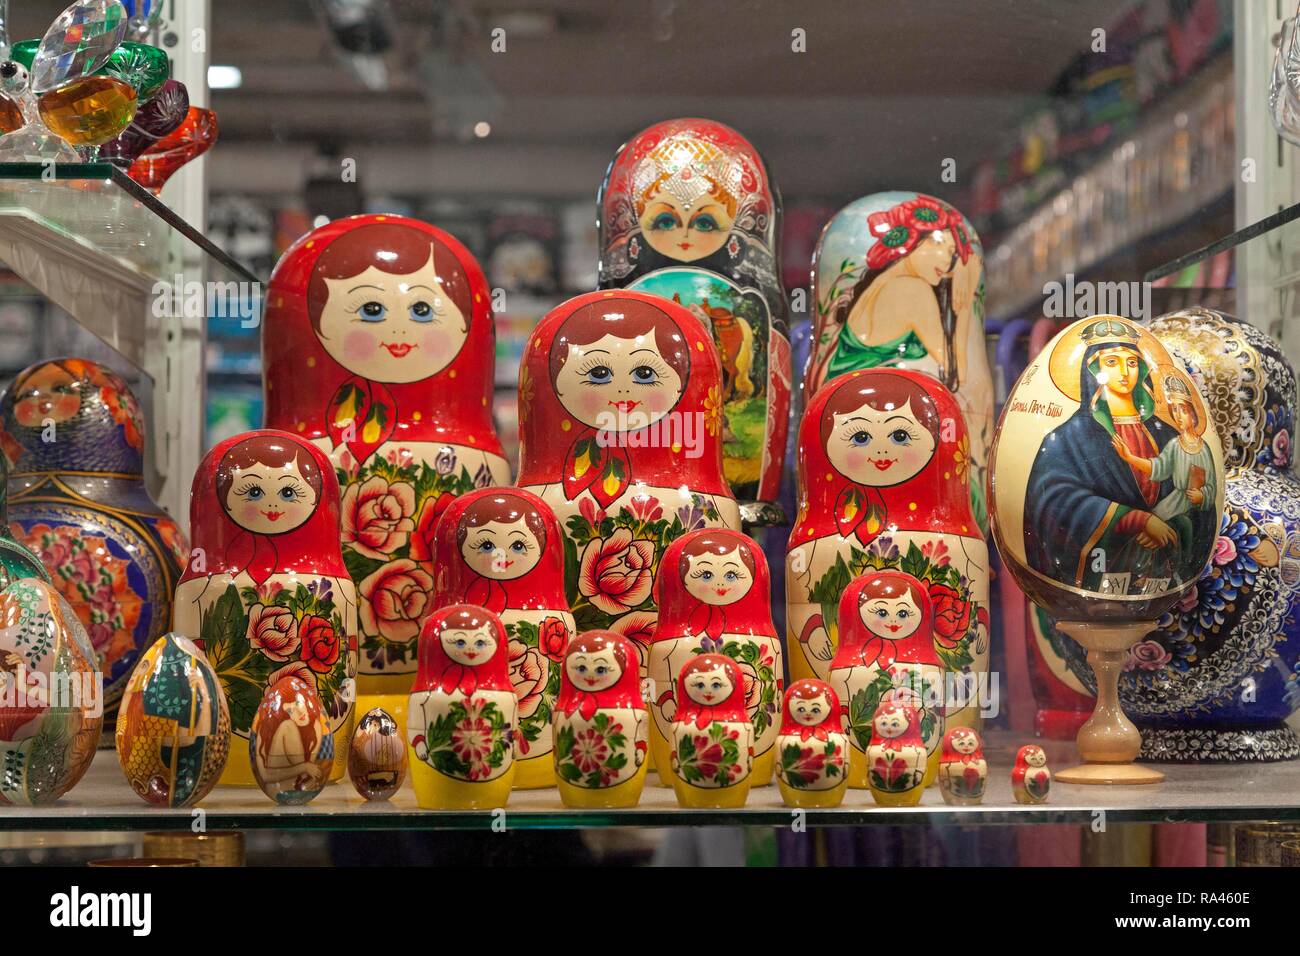 Matrjoschka Puppen, Russische Verschachtelung Puppen, Fenster, Geschenke Shop, historisches Zentrum, Prag, Tschechische Republik Stockfoto